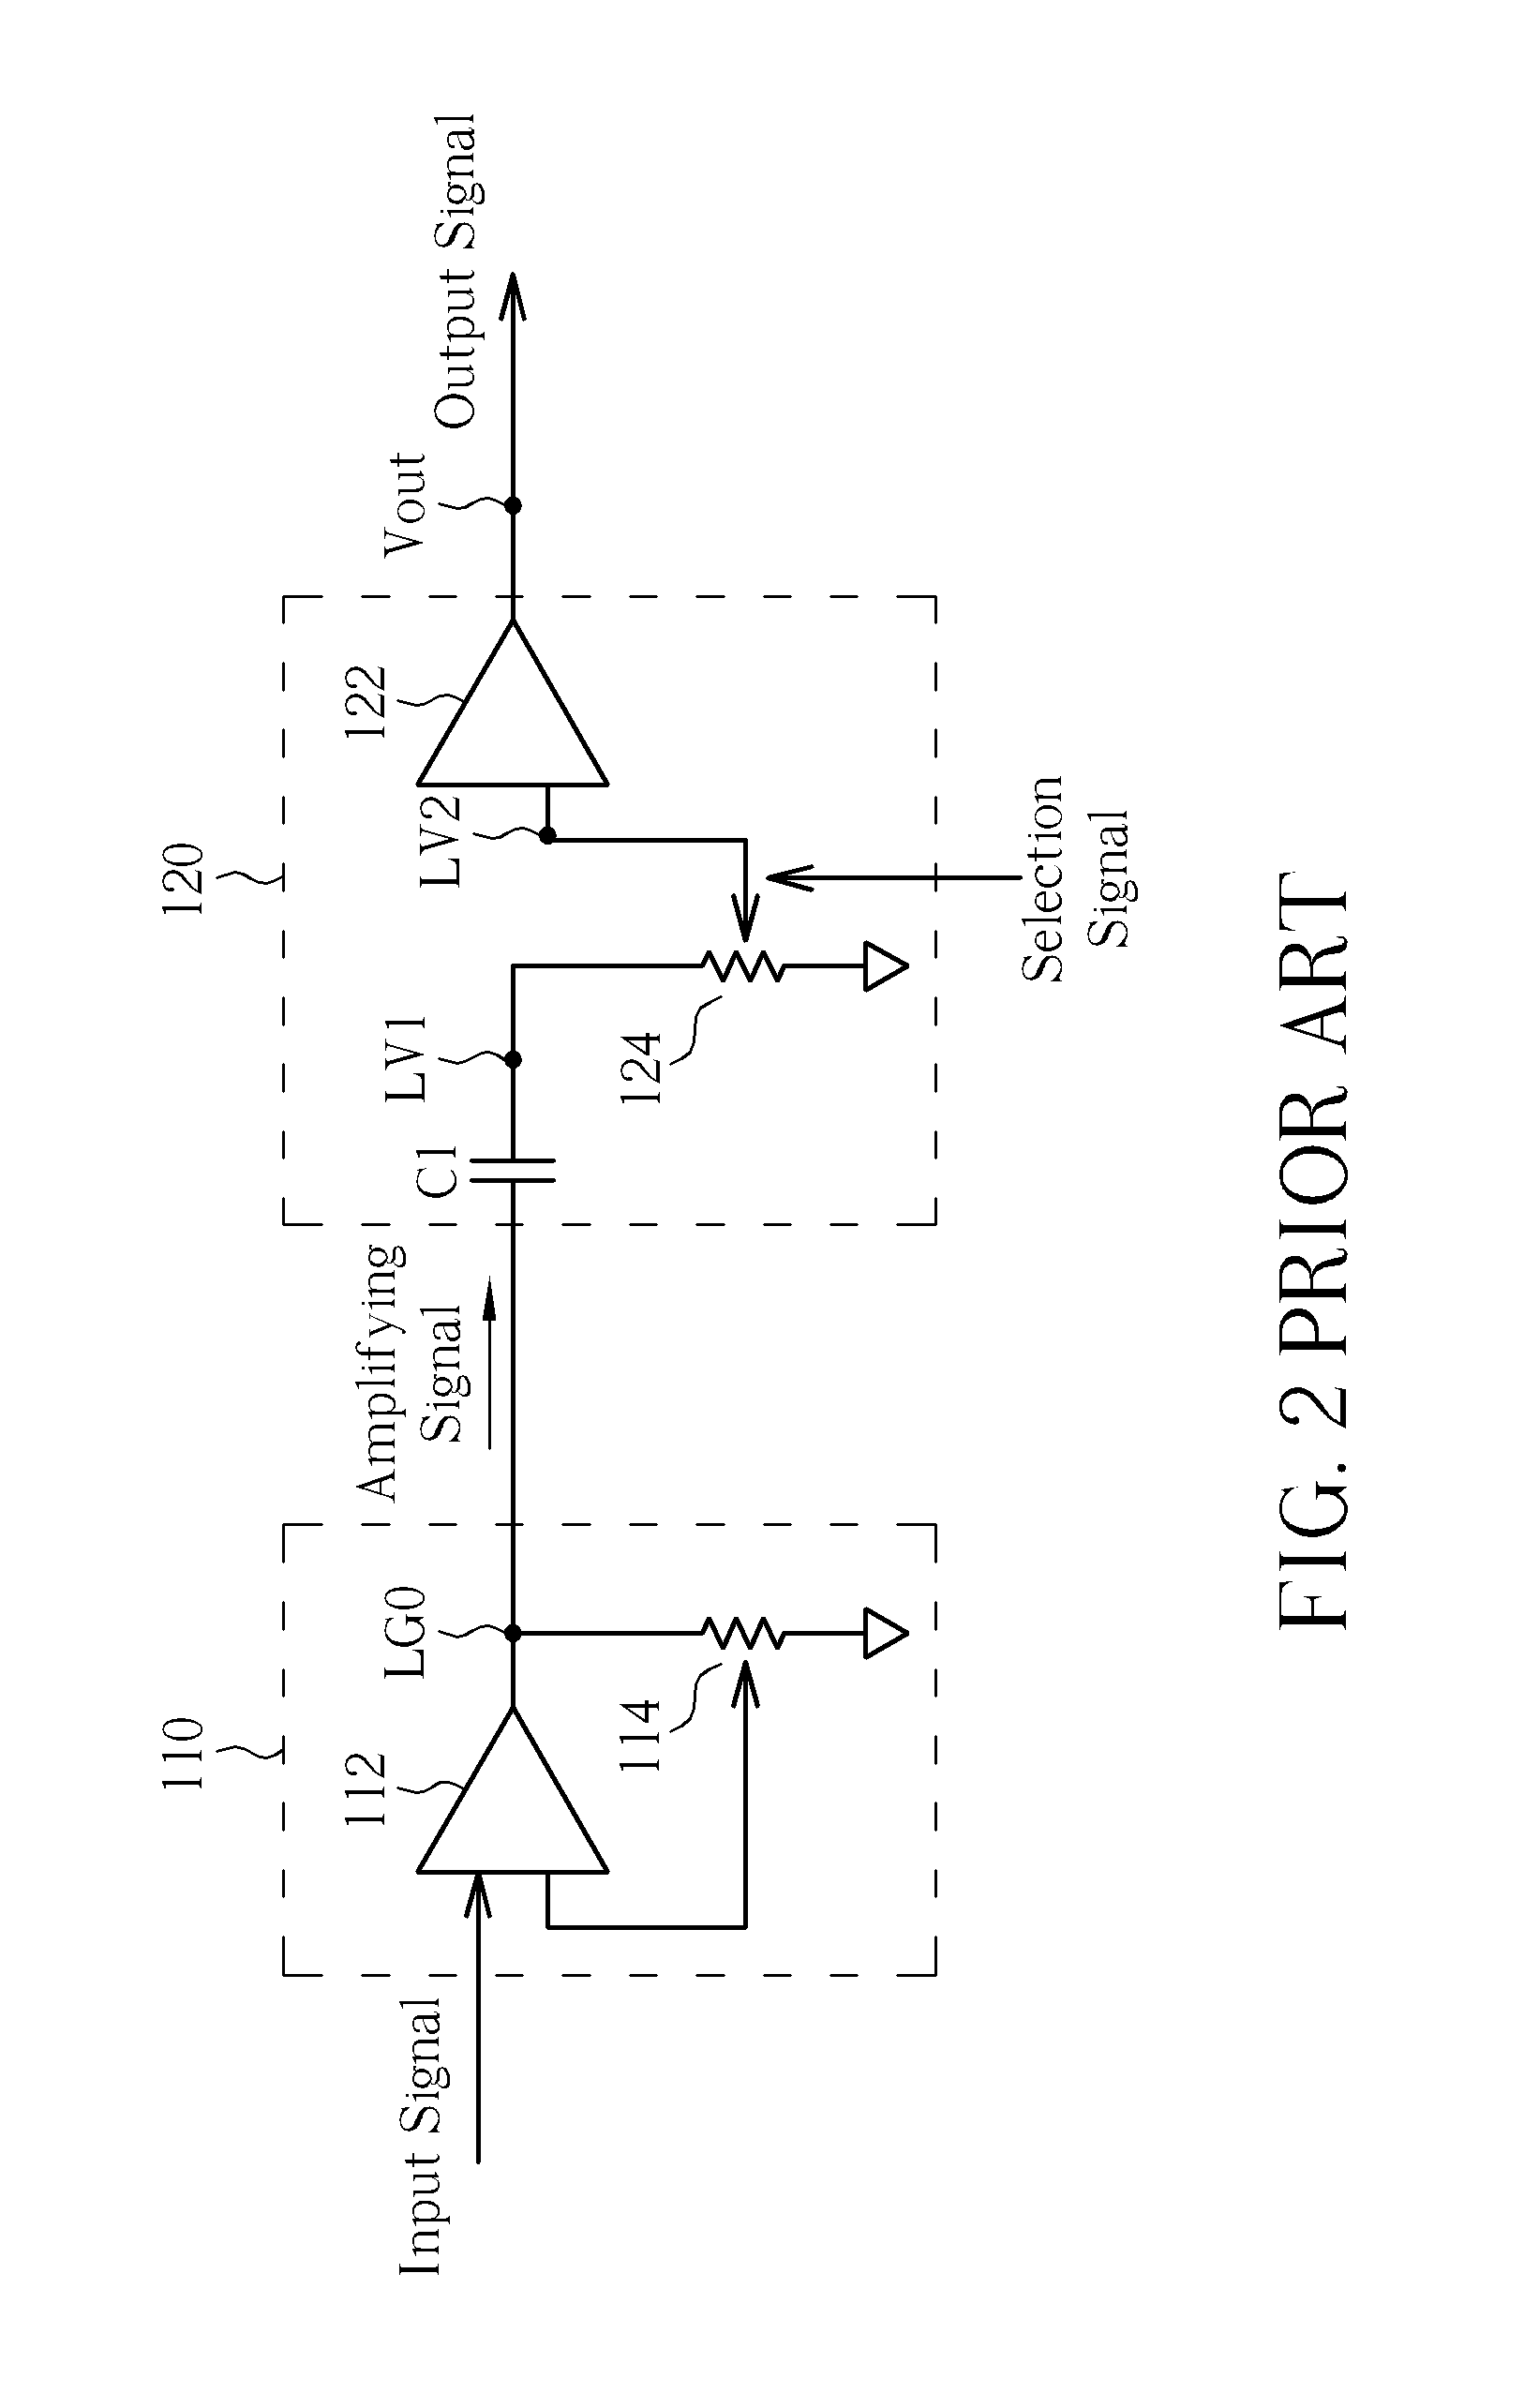 Voltage controlling circuit